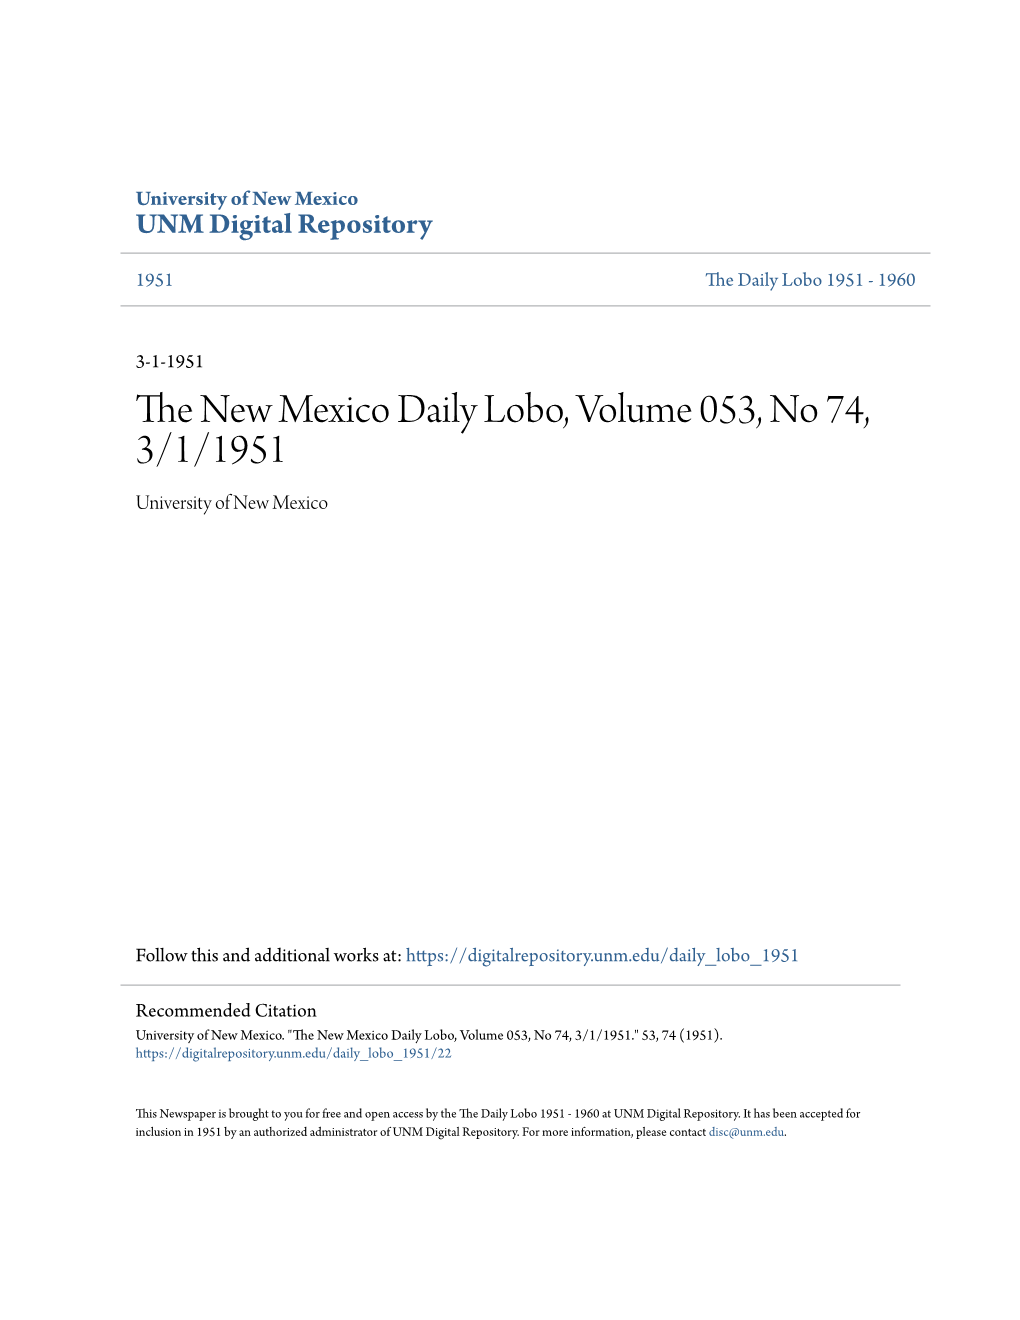 The New Mexico Daily Lobo, Volume 053, No 74, 3/1/1951